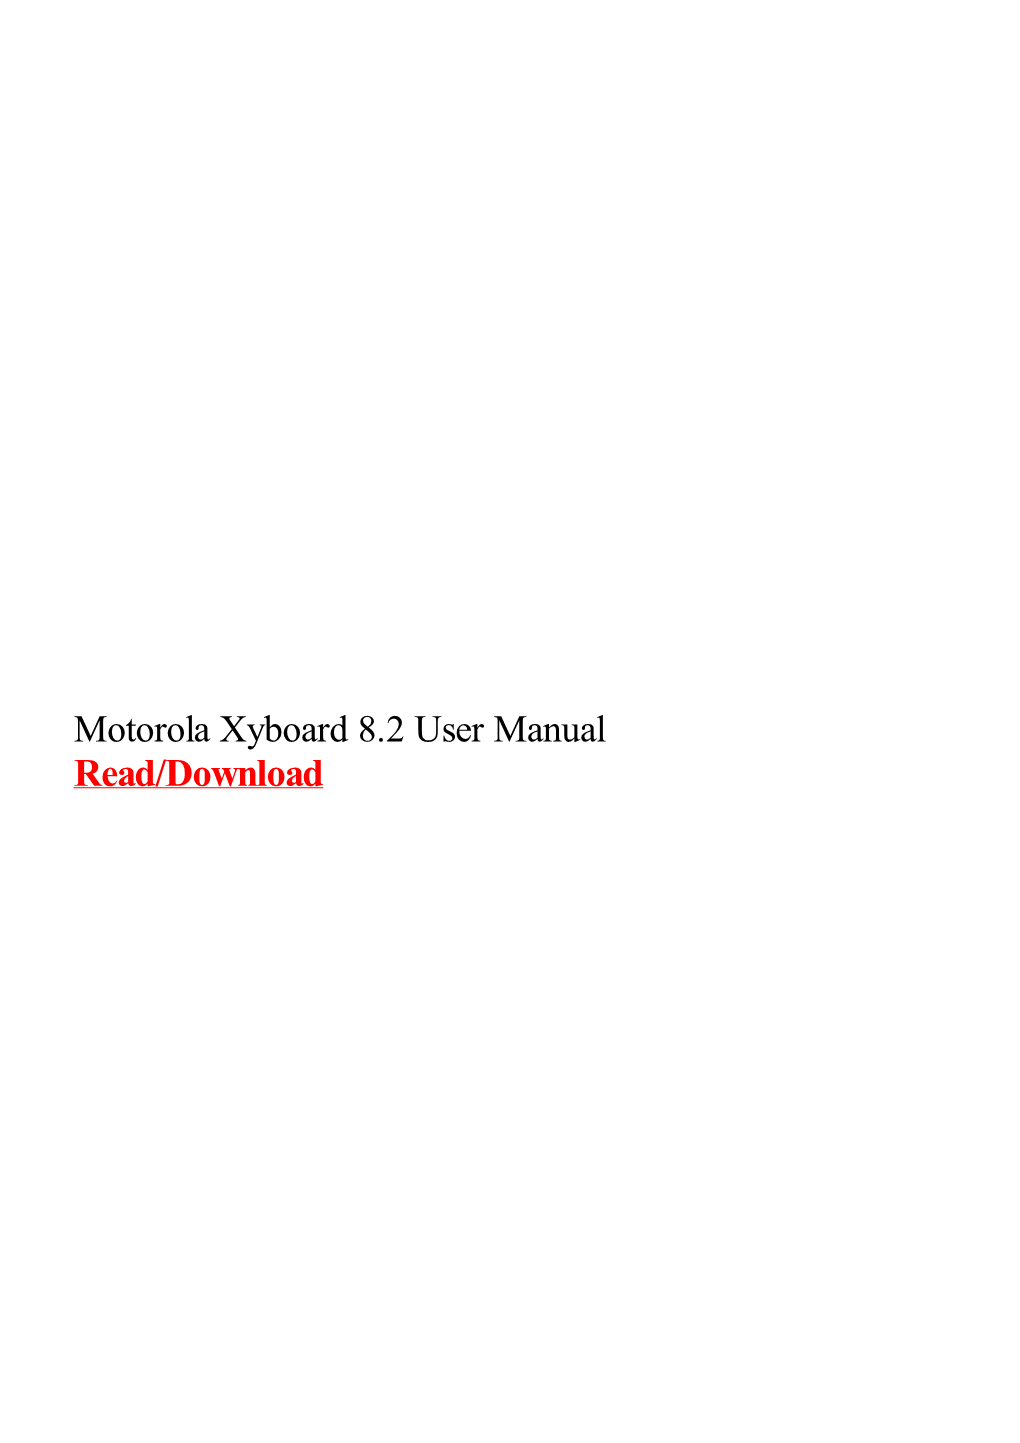 Motorola Xyboard 8.2 User Manual